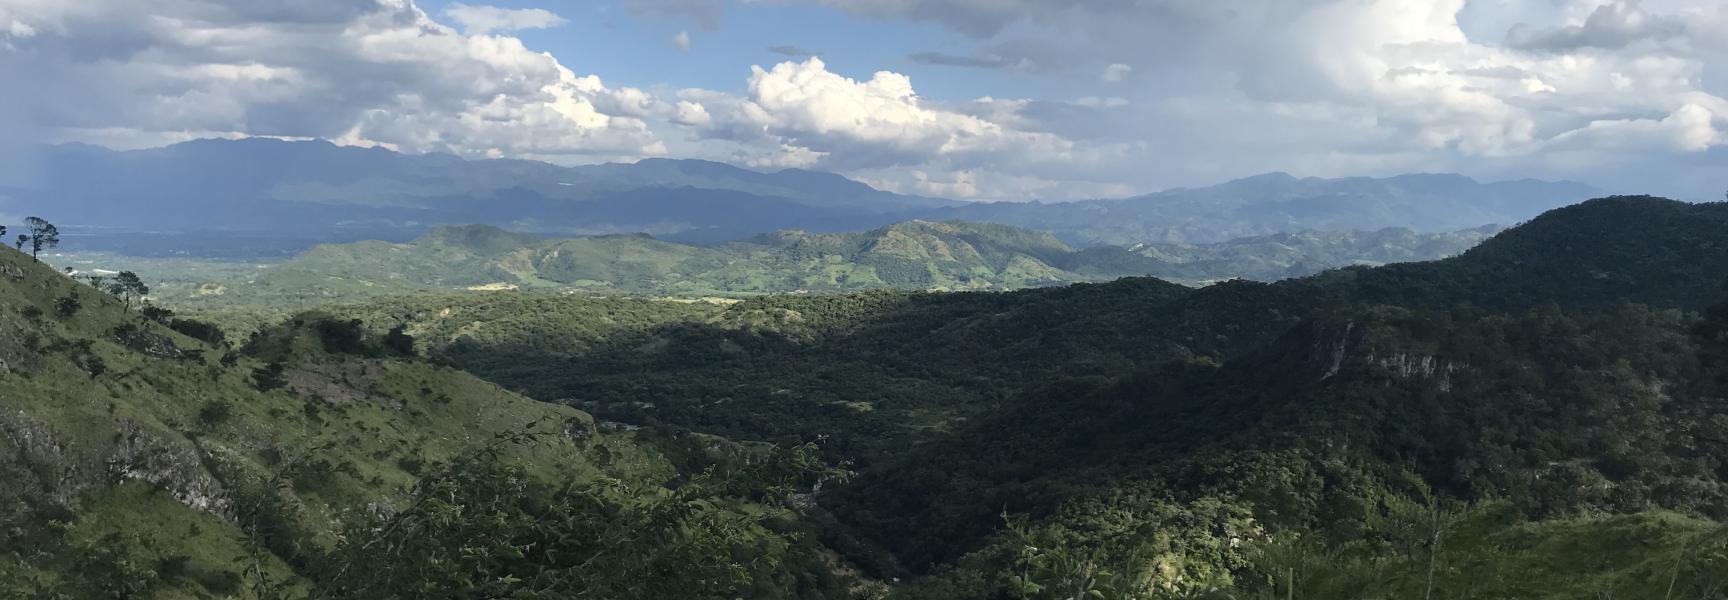 Honduras landscape